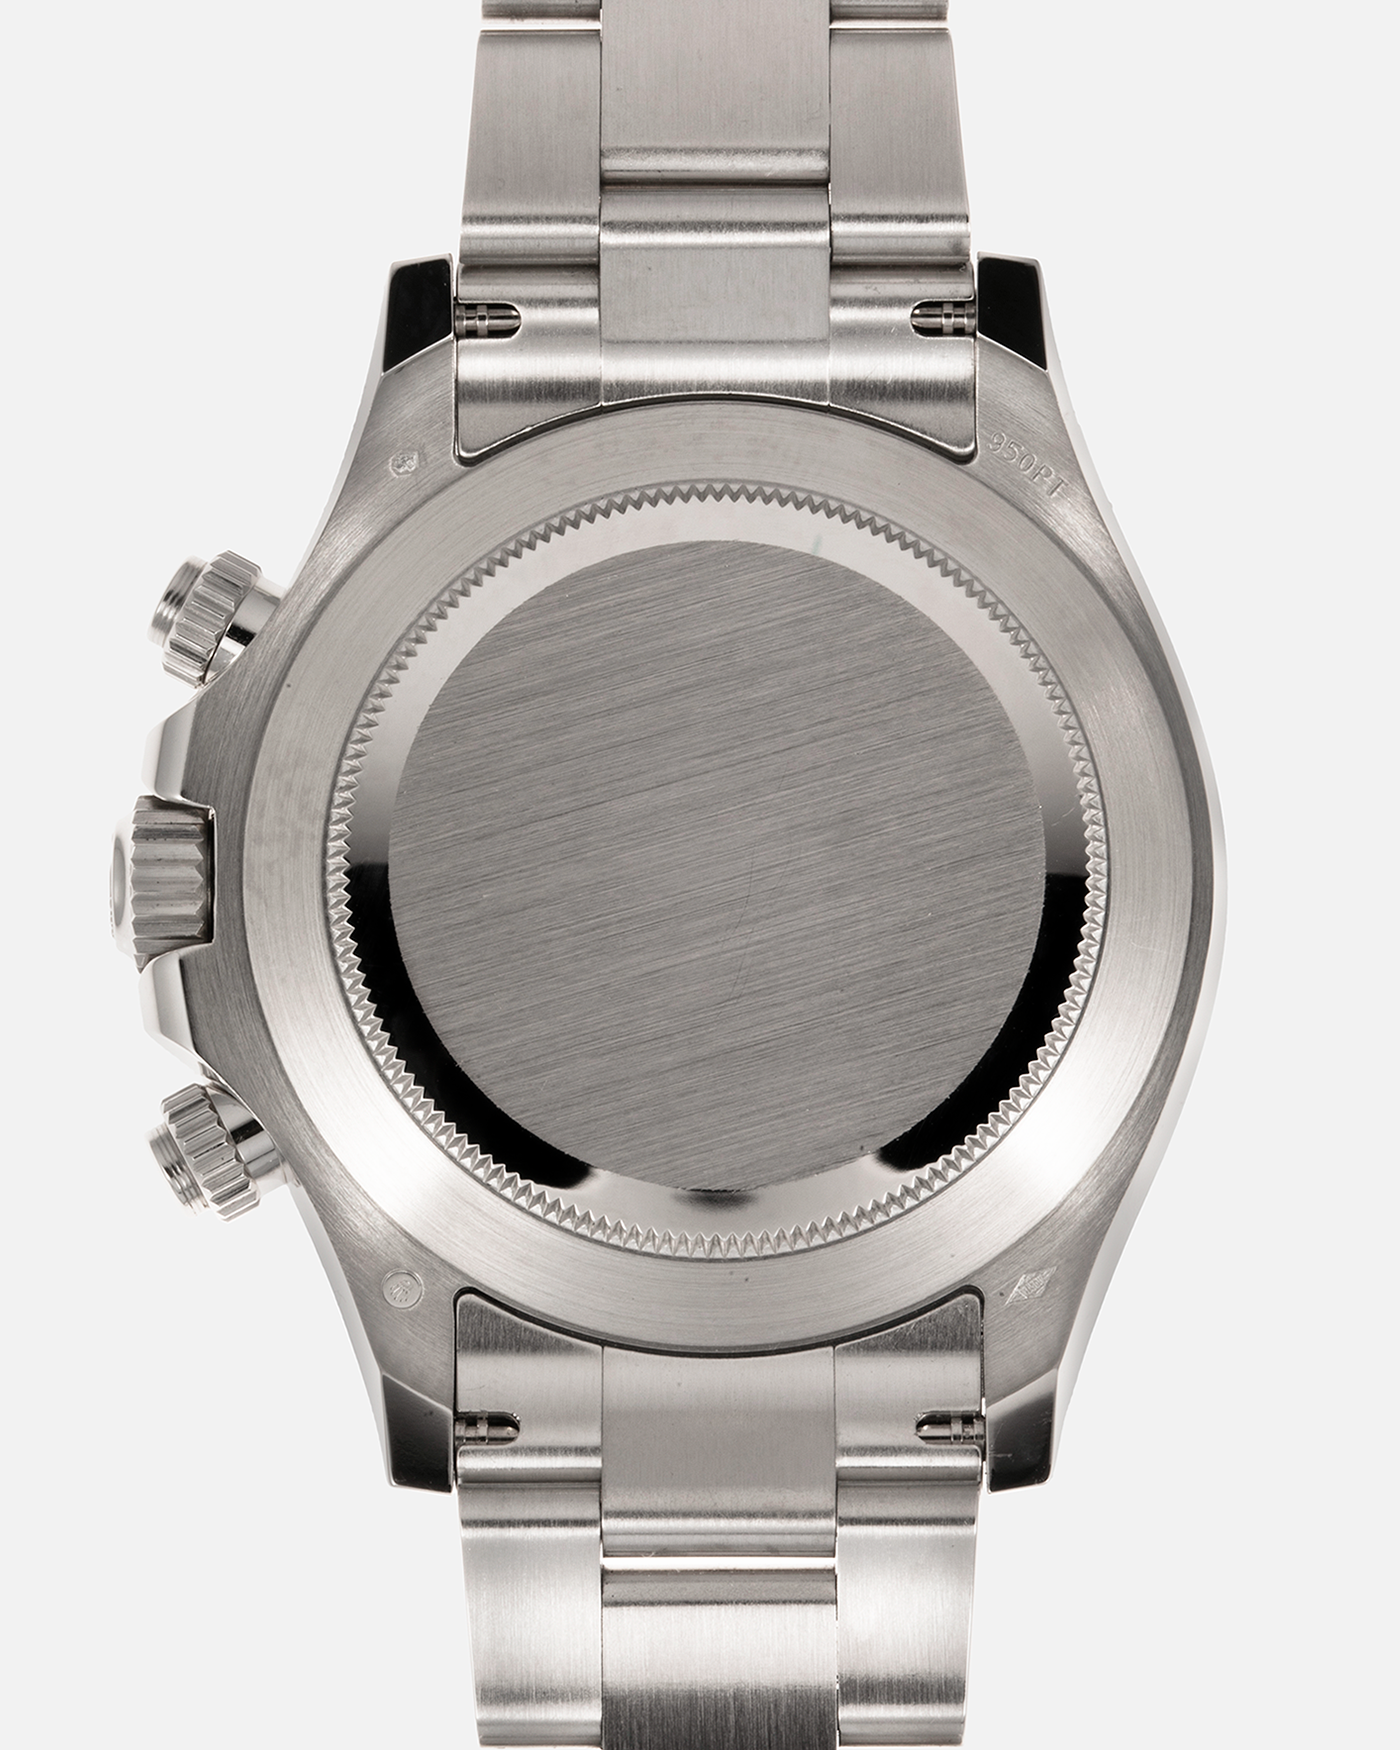 Brand: Rolex Year: 2015 Model: Cosmograph Daytona Reference: 116506 Material: Platinum 950 Movement: Rolex Cal. 4130, Self-Winding Case Diameter: 40mm Strap: Rolex Platinum Oyster Bracelet